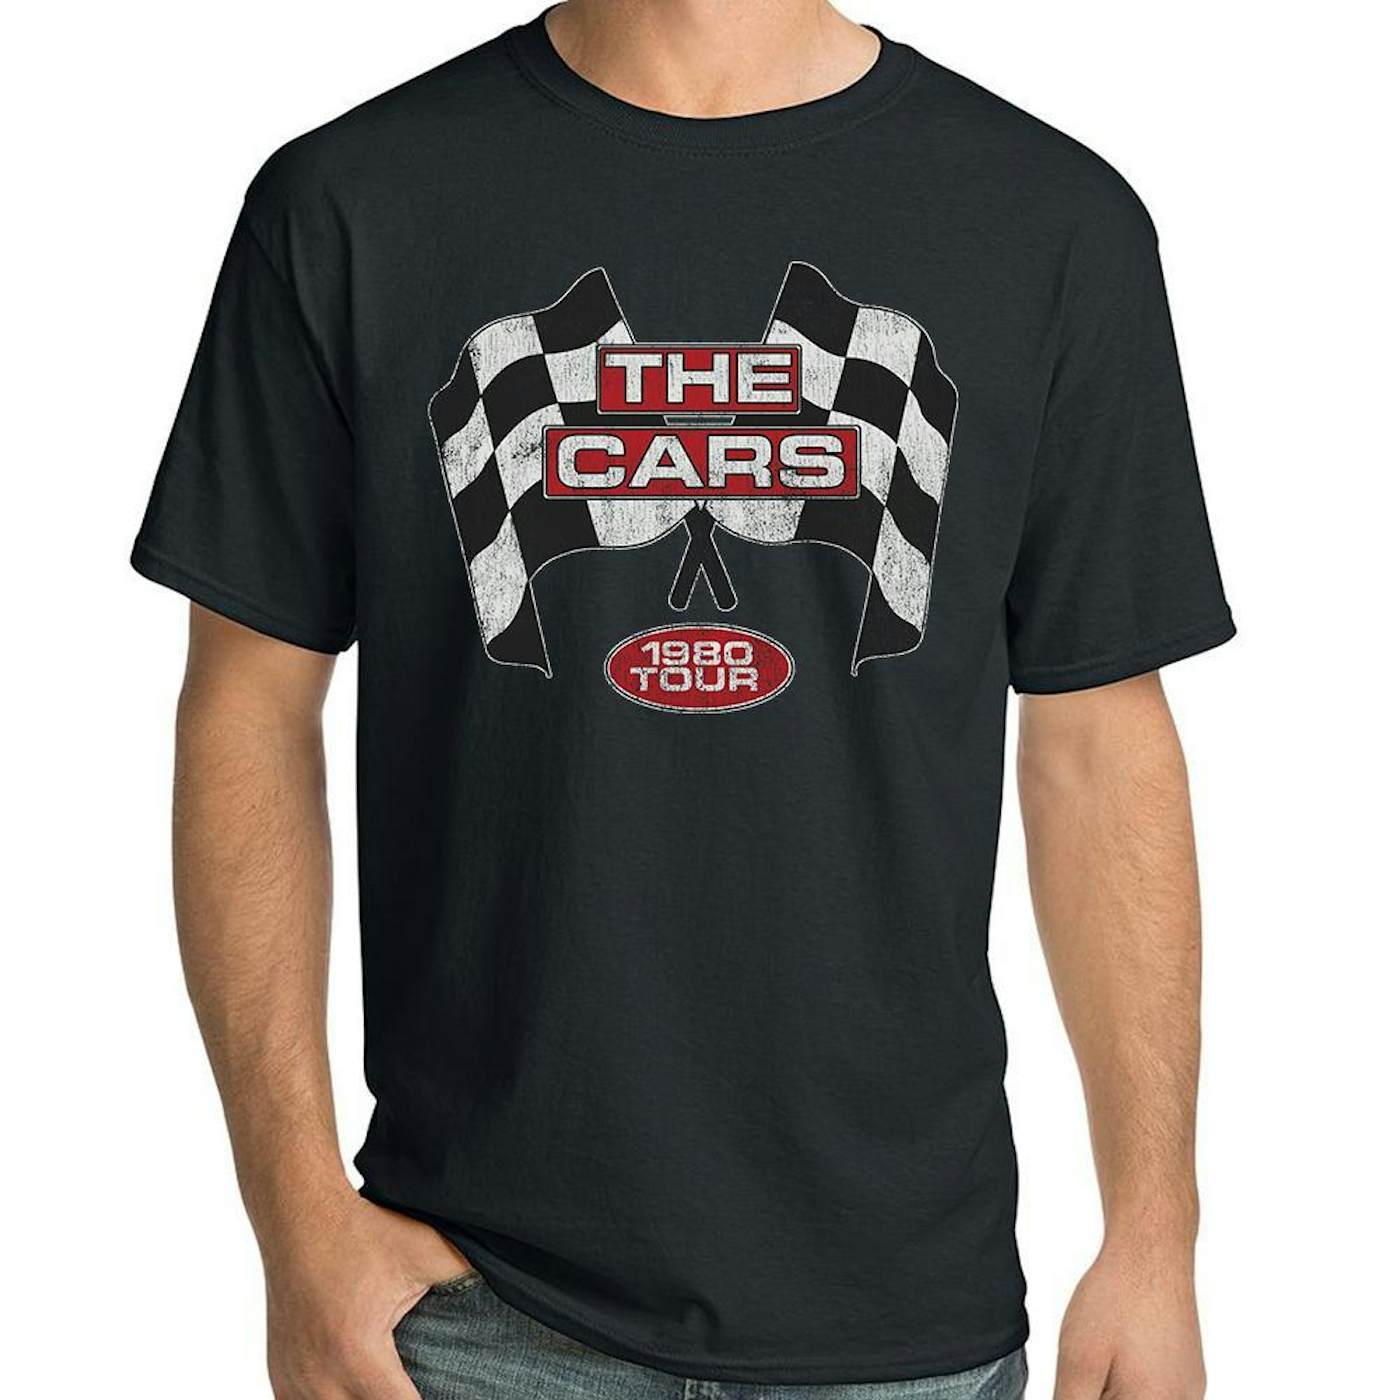 The Cars "Flags 1980 Tour" T-Shirt